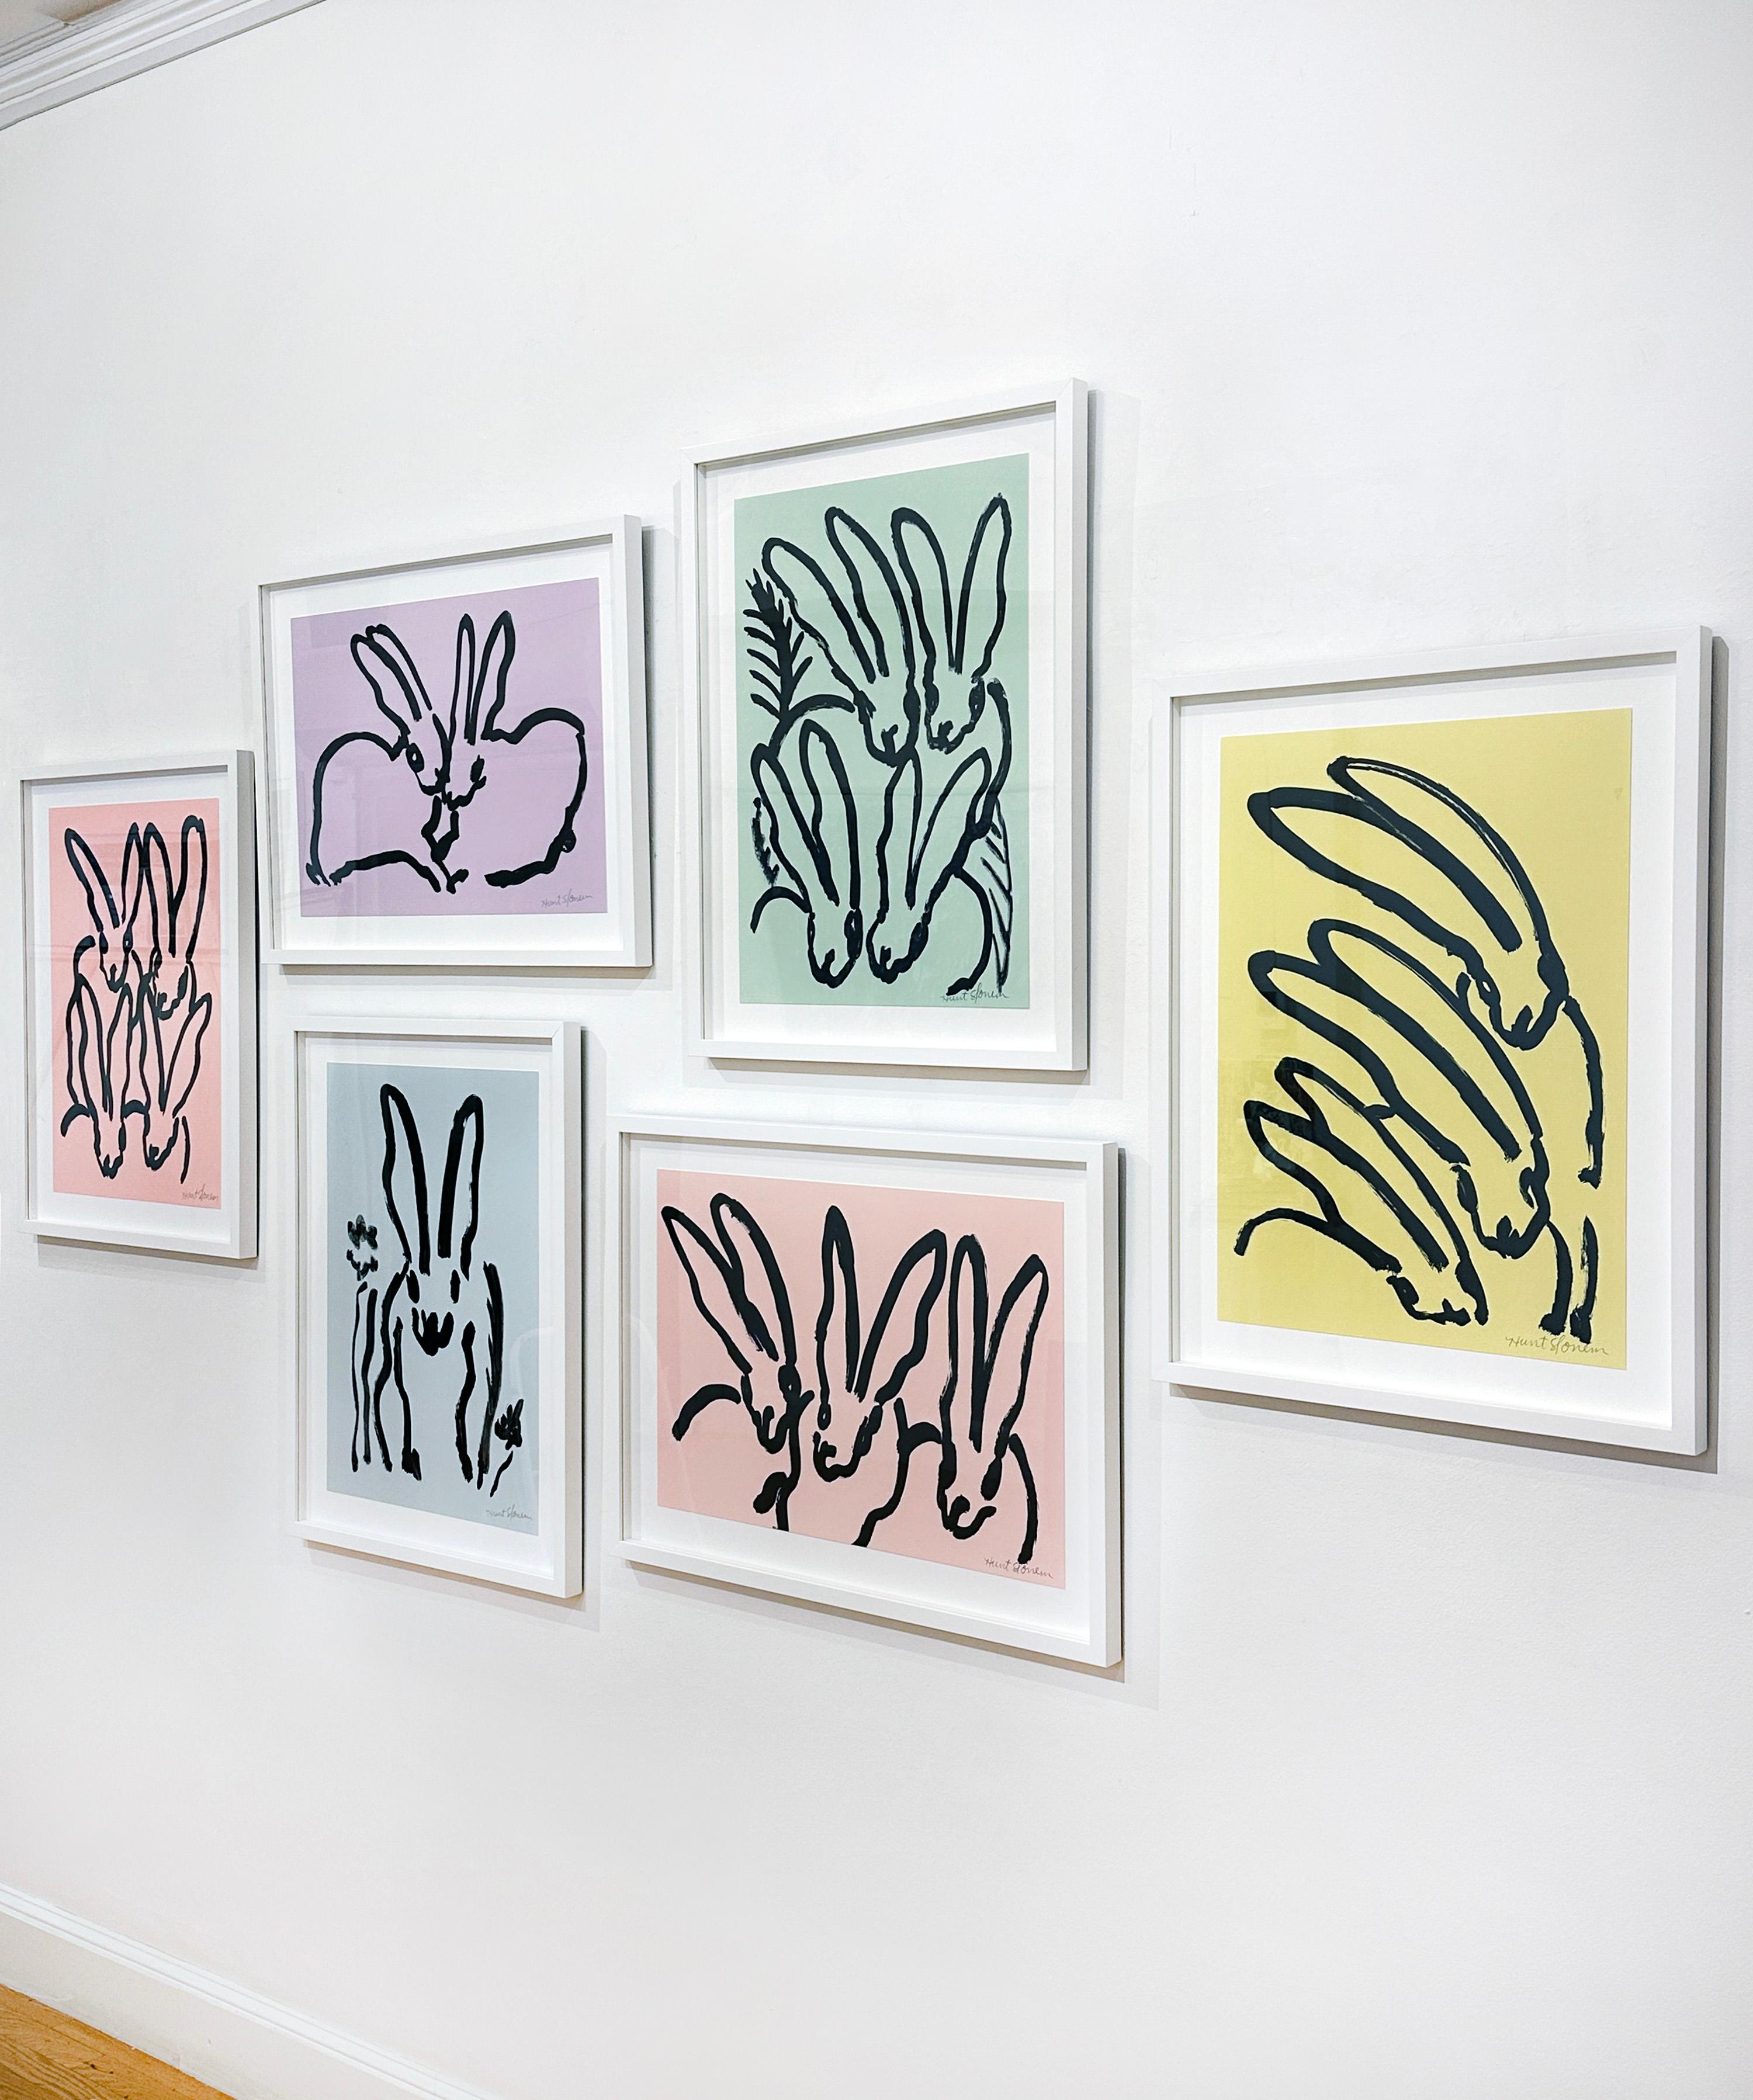 Artist:  Slonem, Hunt
Title:  Pale Pink Bunnies
Series:  Bunnies
Date:  2017
Medium:  Lithograph on Paper
Unframed Dimensions:  16